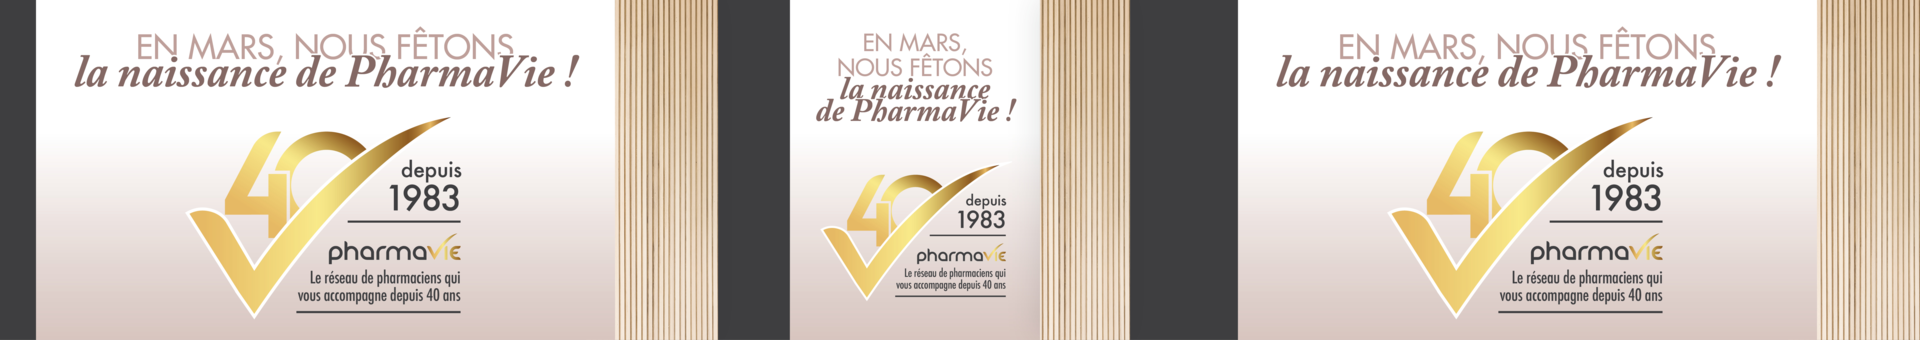 Pharmacie Internationale,Nice